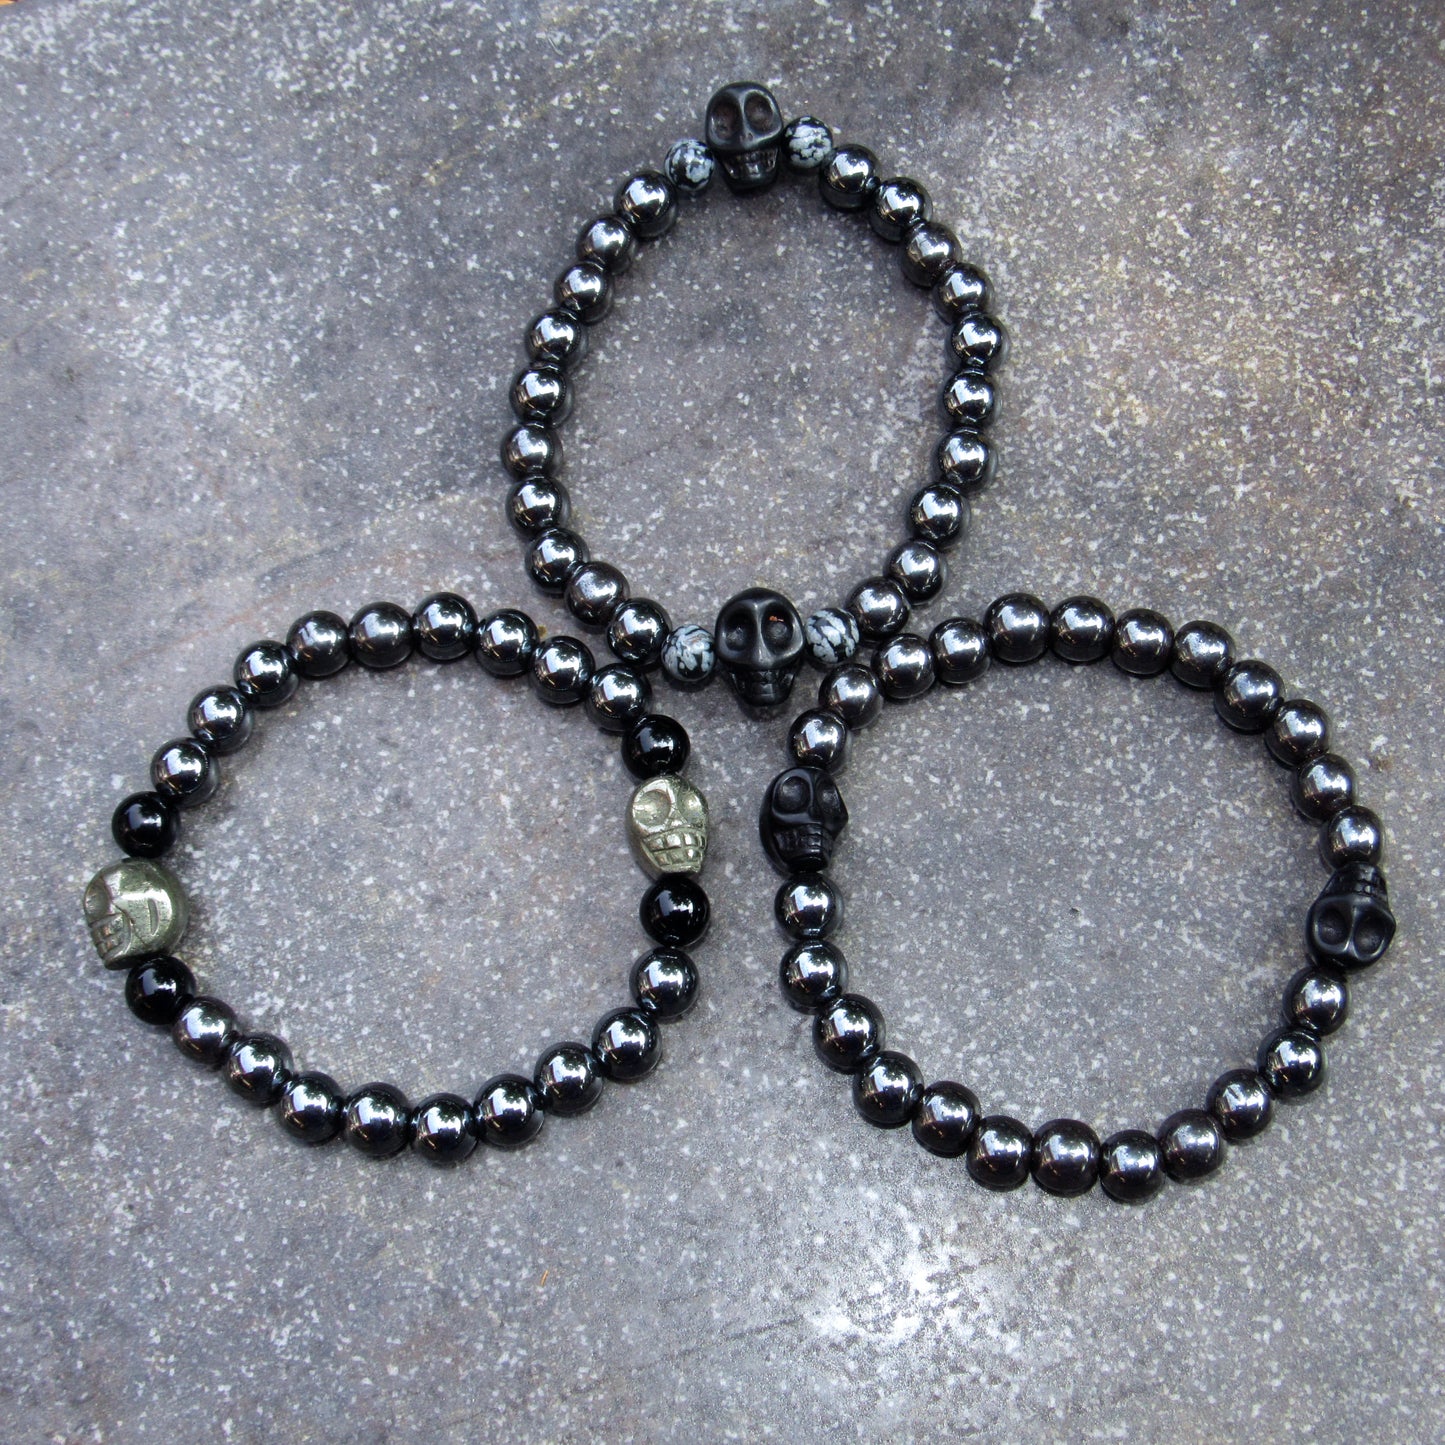 Hematite Gemstone and Skulls bracelet